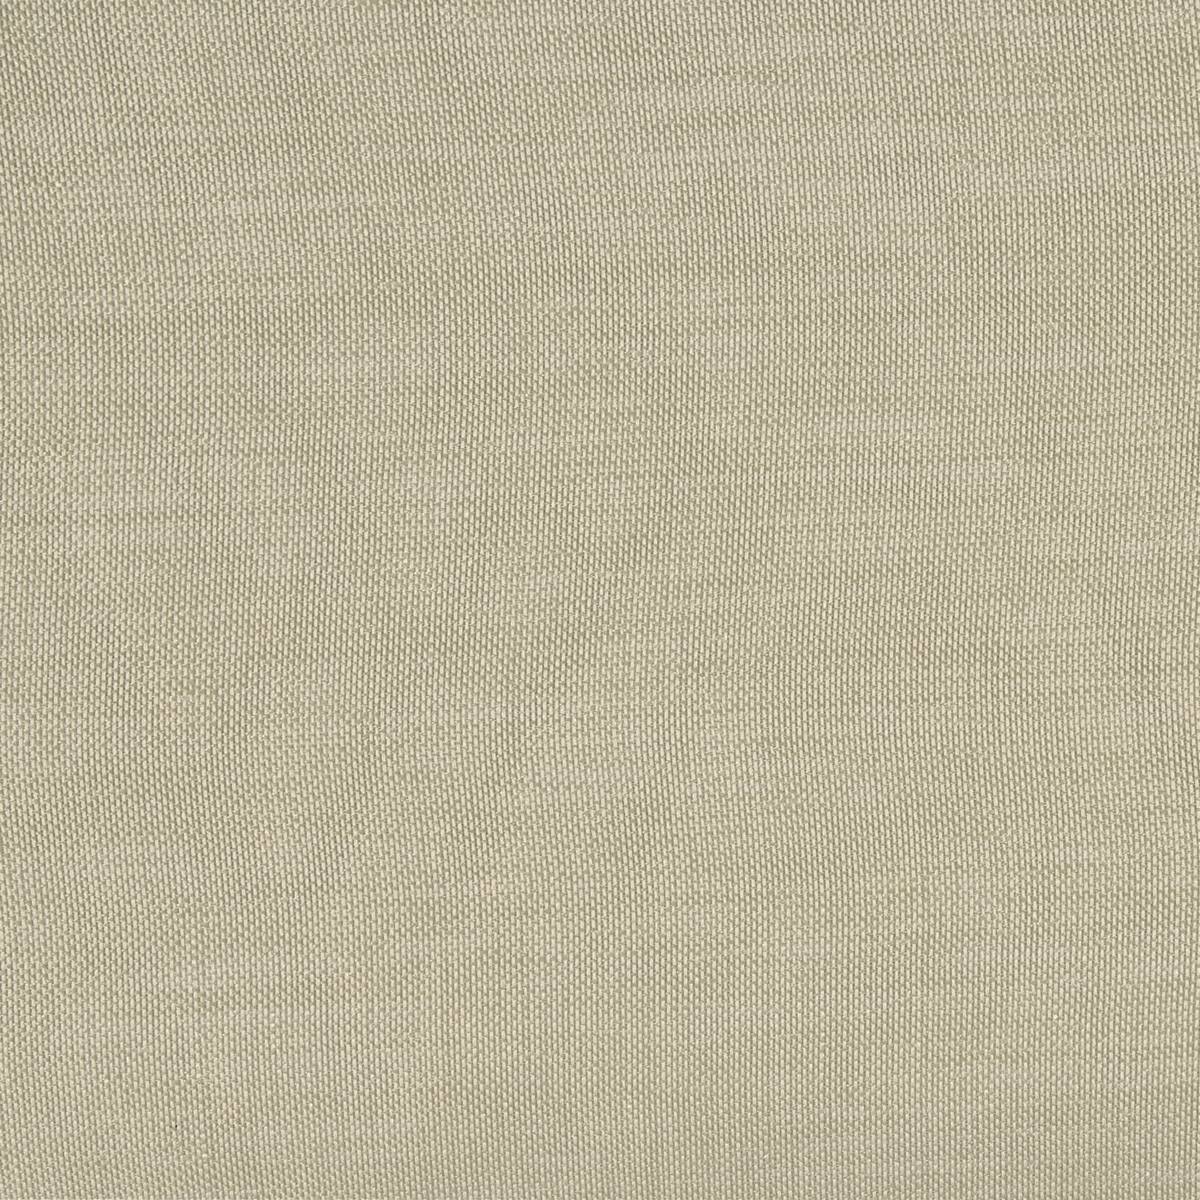 Fenchurch Cream Fabric by Prestigious Textiles